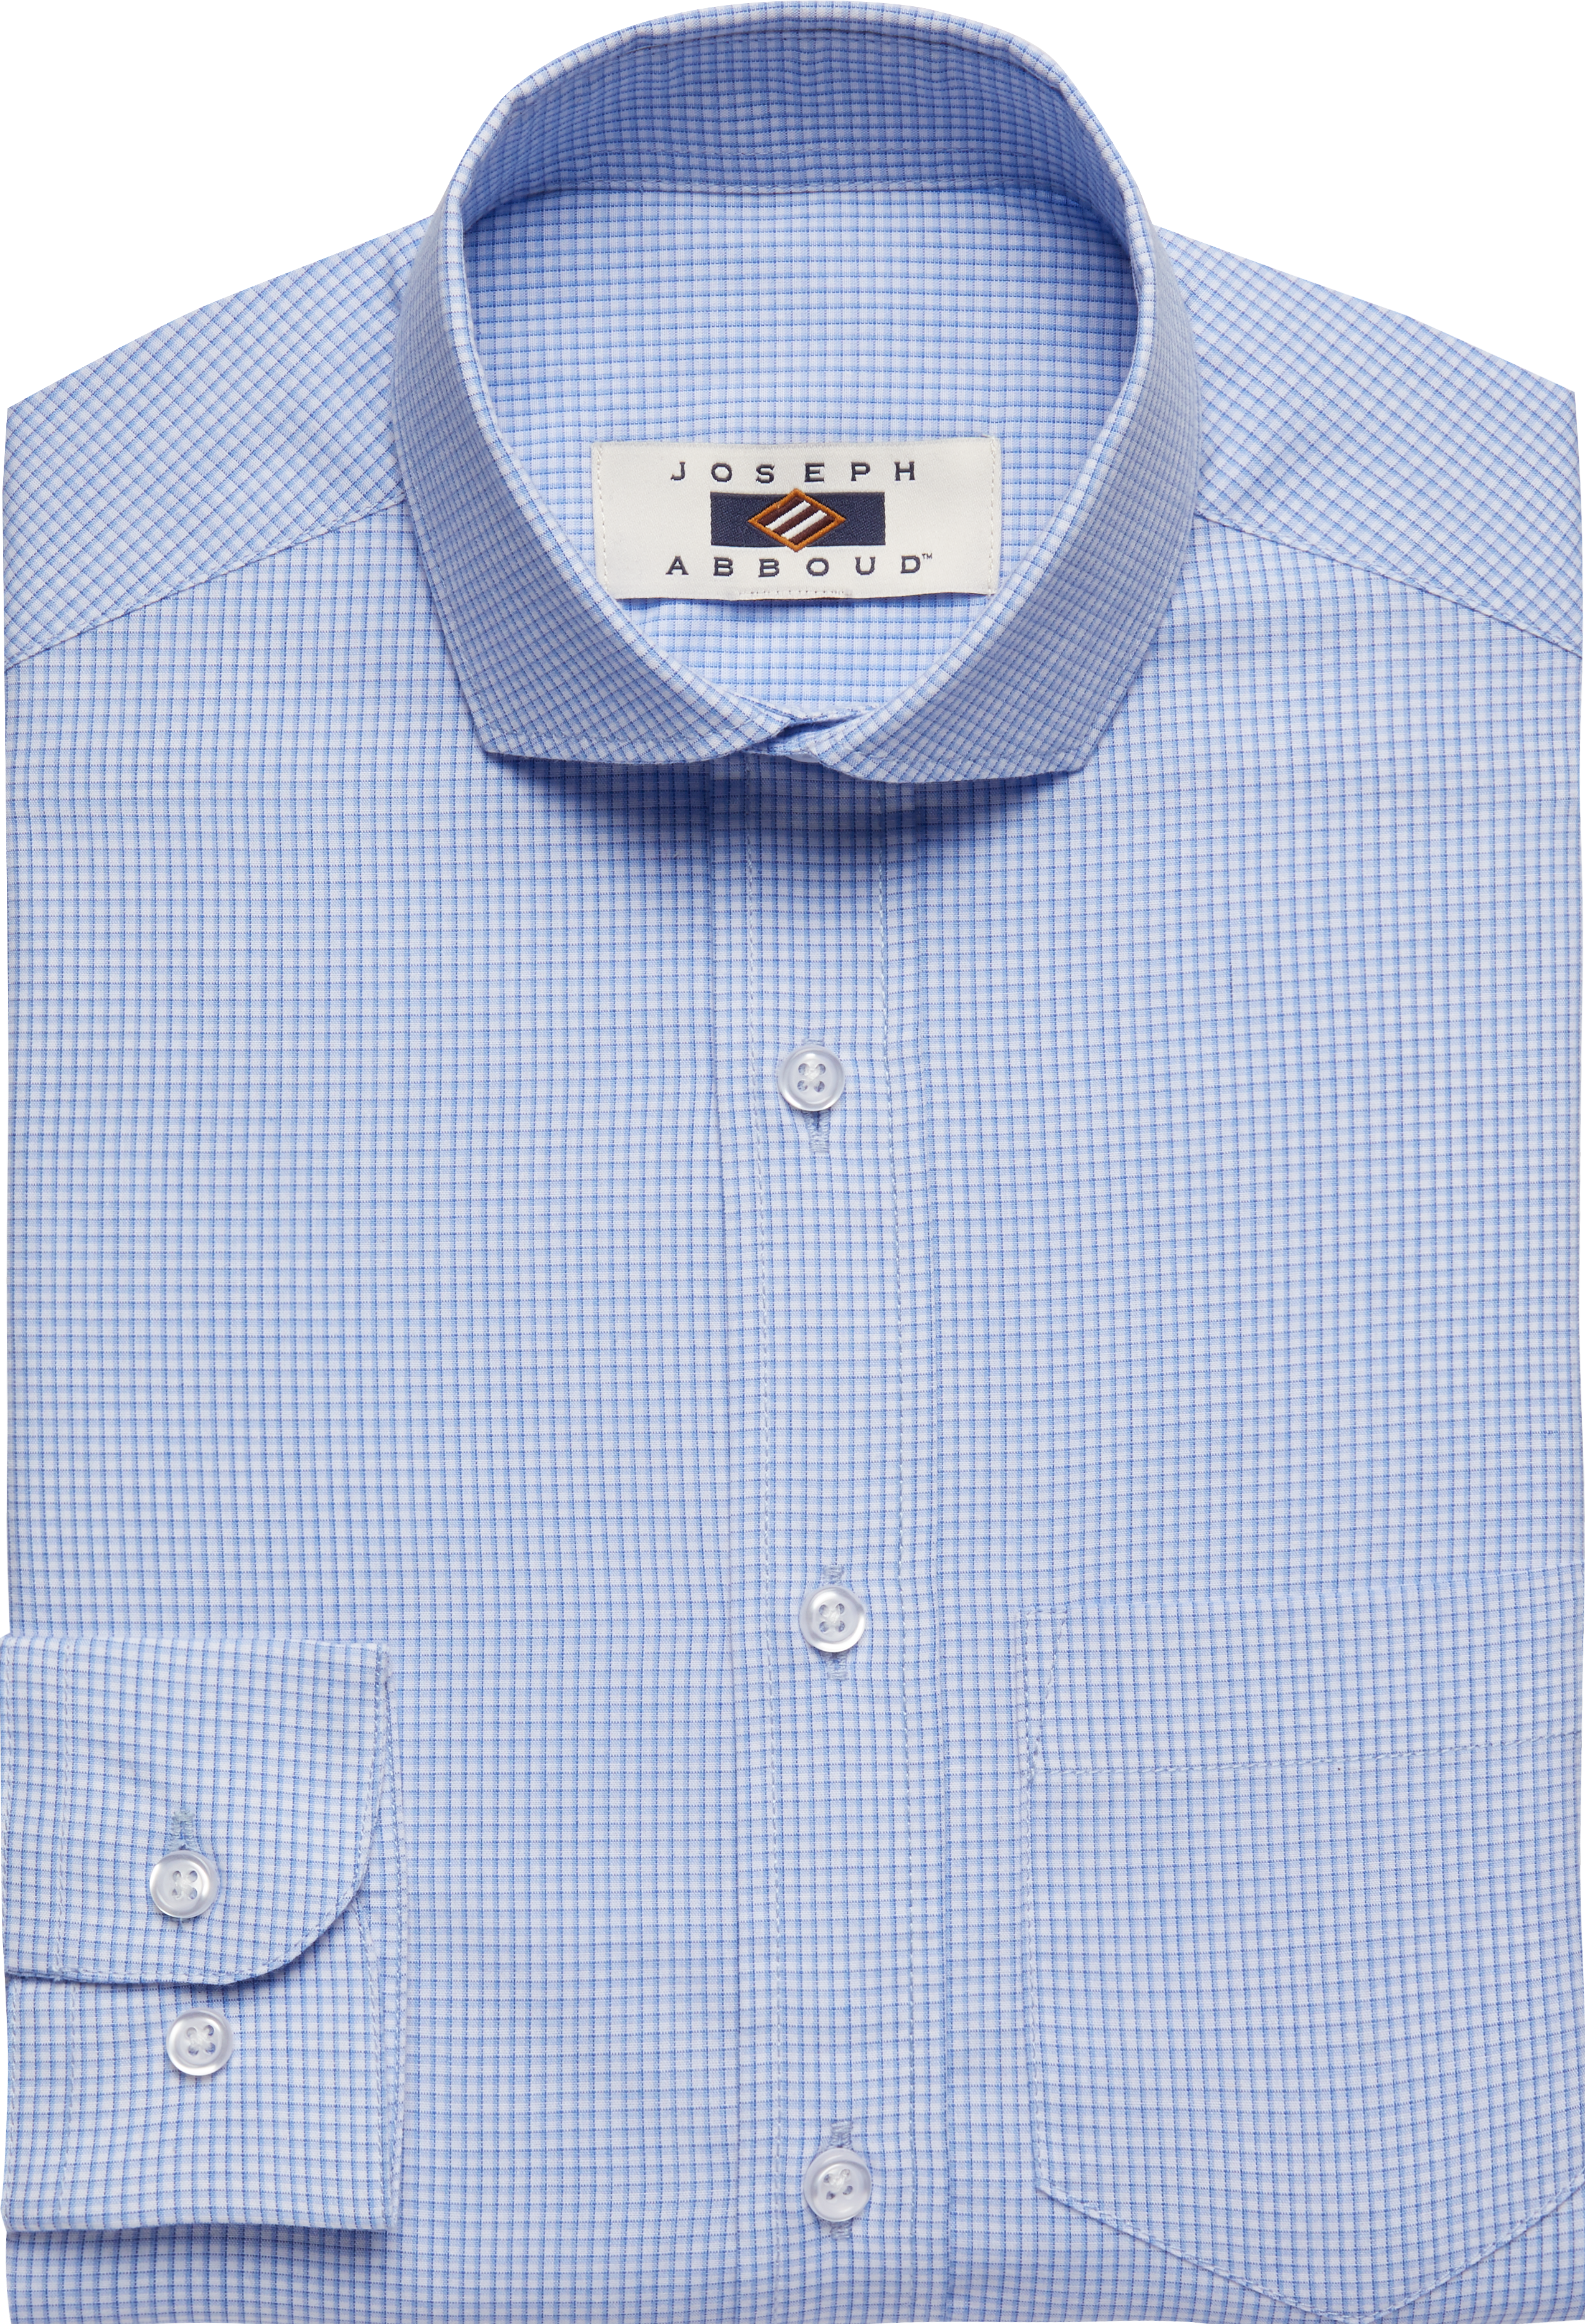 Joseph Abboud Boys Blue Check Dress Shirt - Men's Shirts | Men's Wearhouse